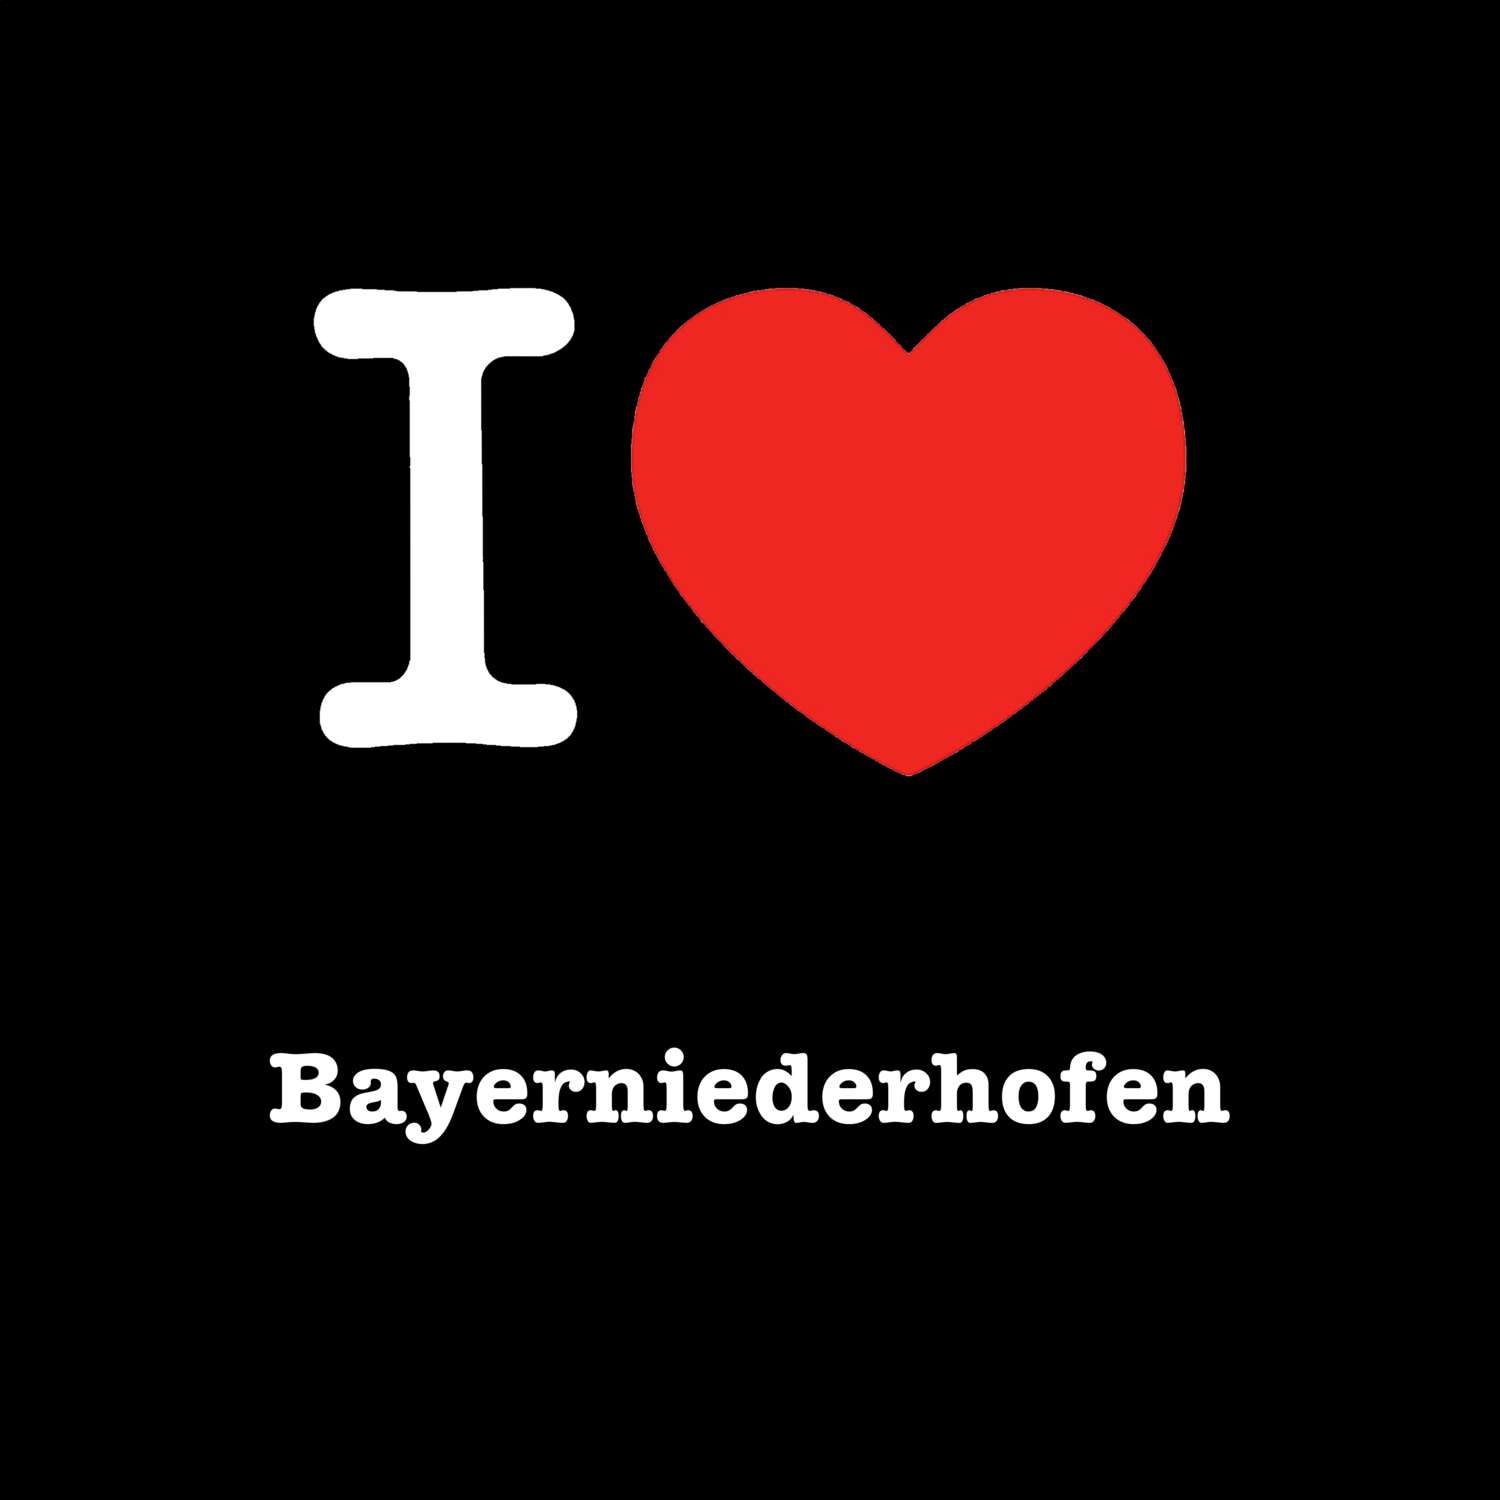 Bayerniederhofen T-Shirt »I love«